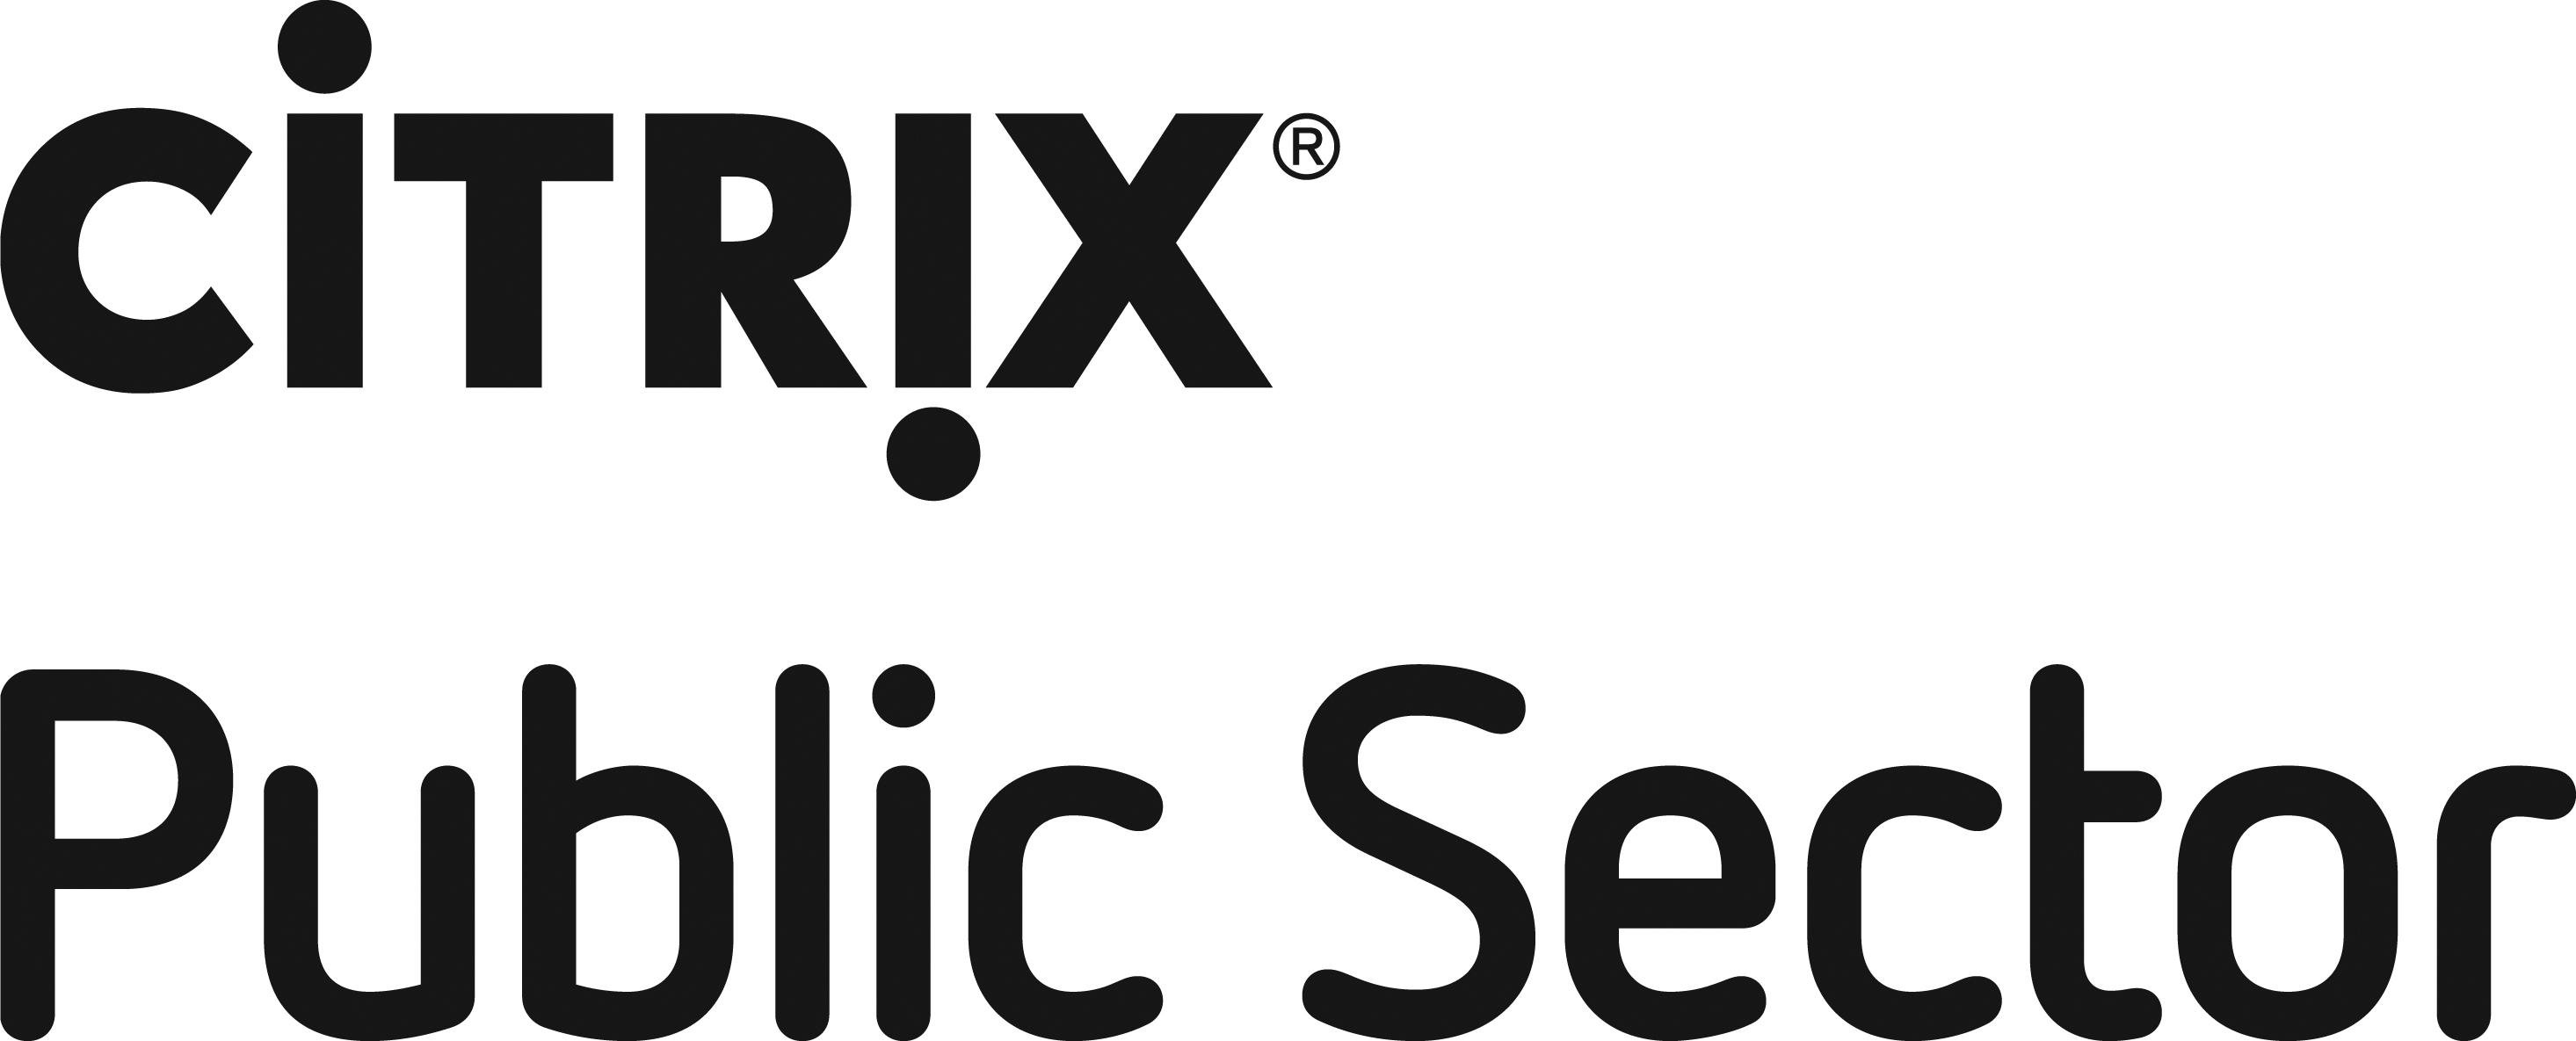 t4_Citrix_Public_Sector_logo_vert_K.jpg